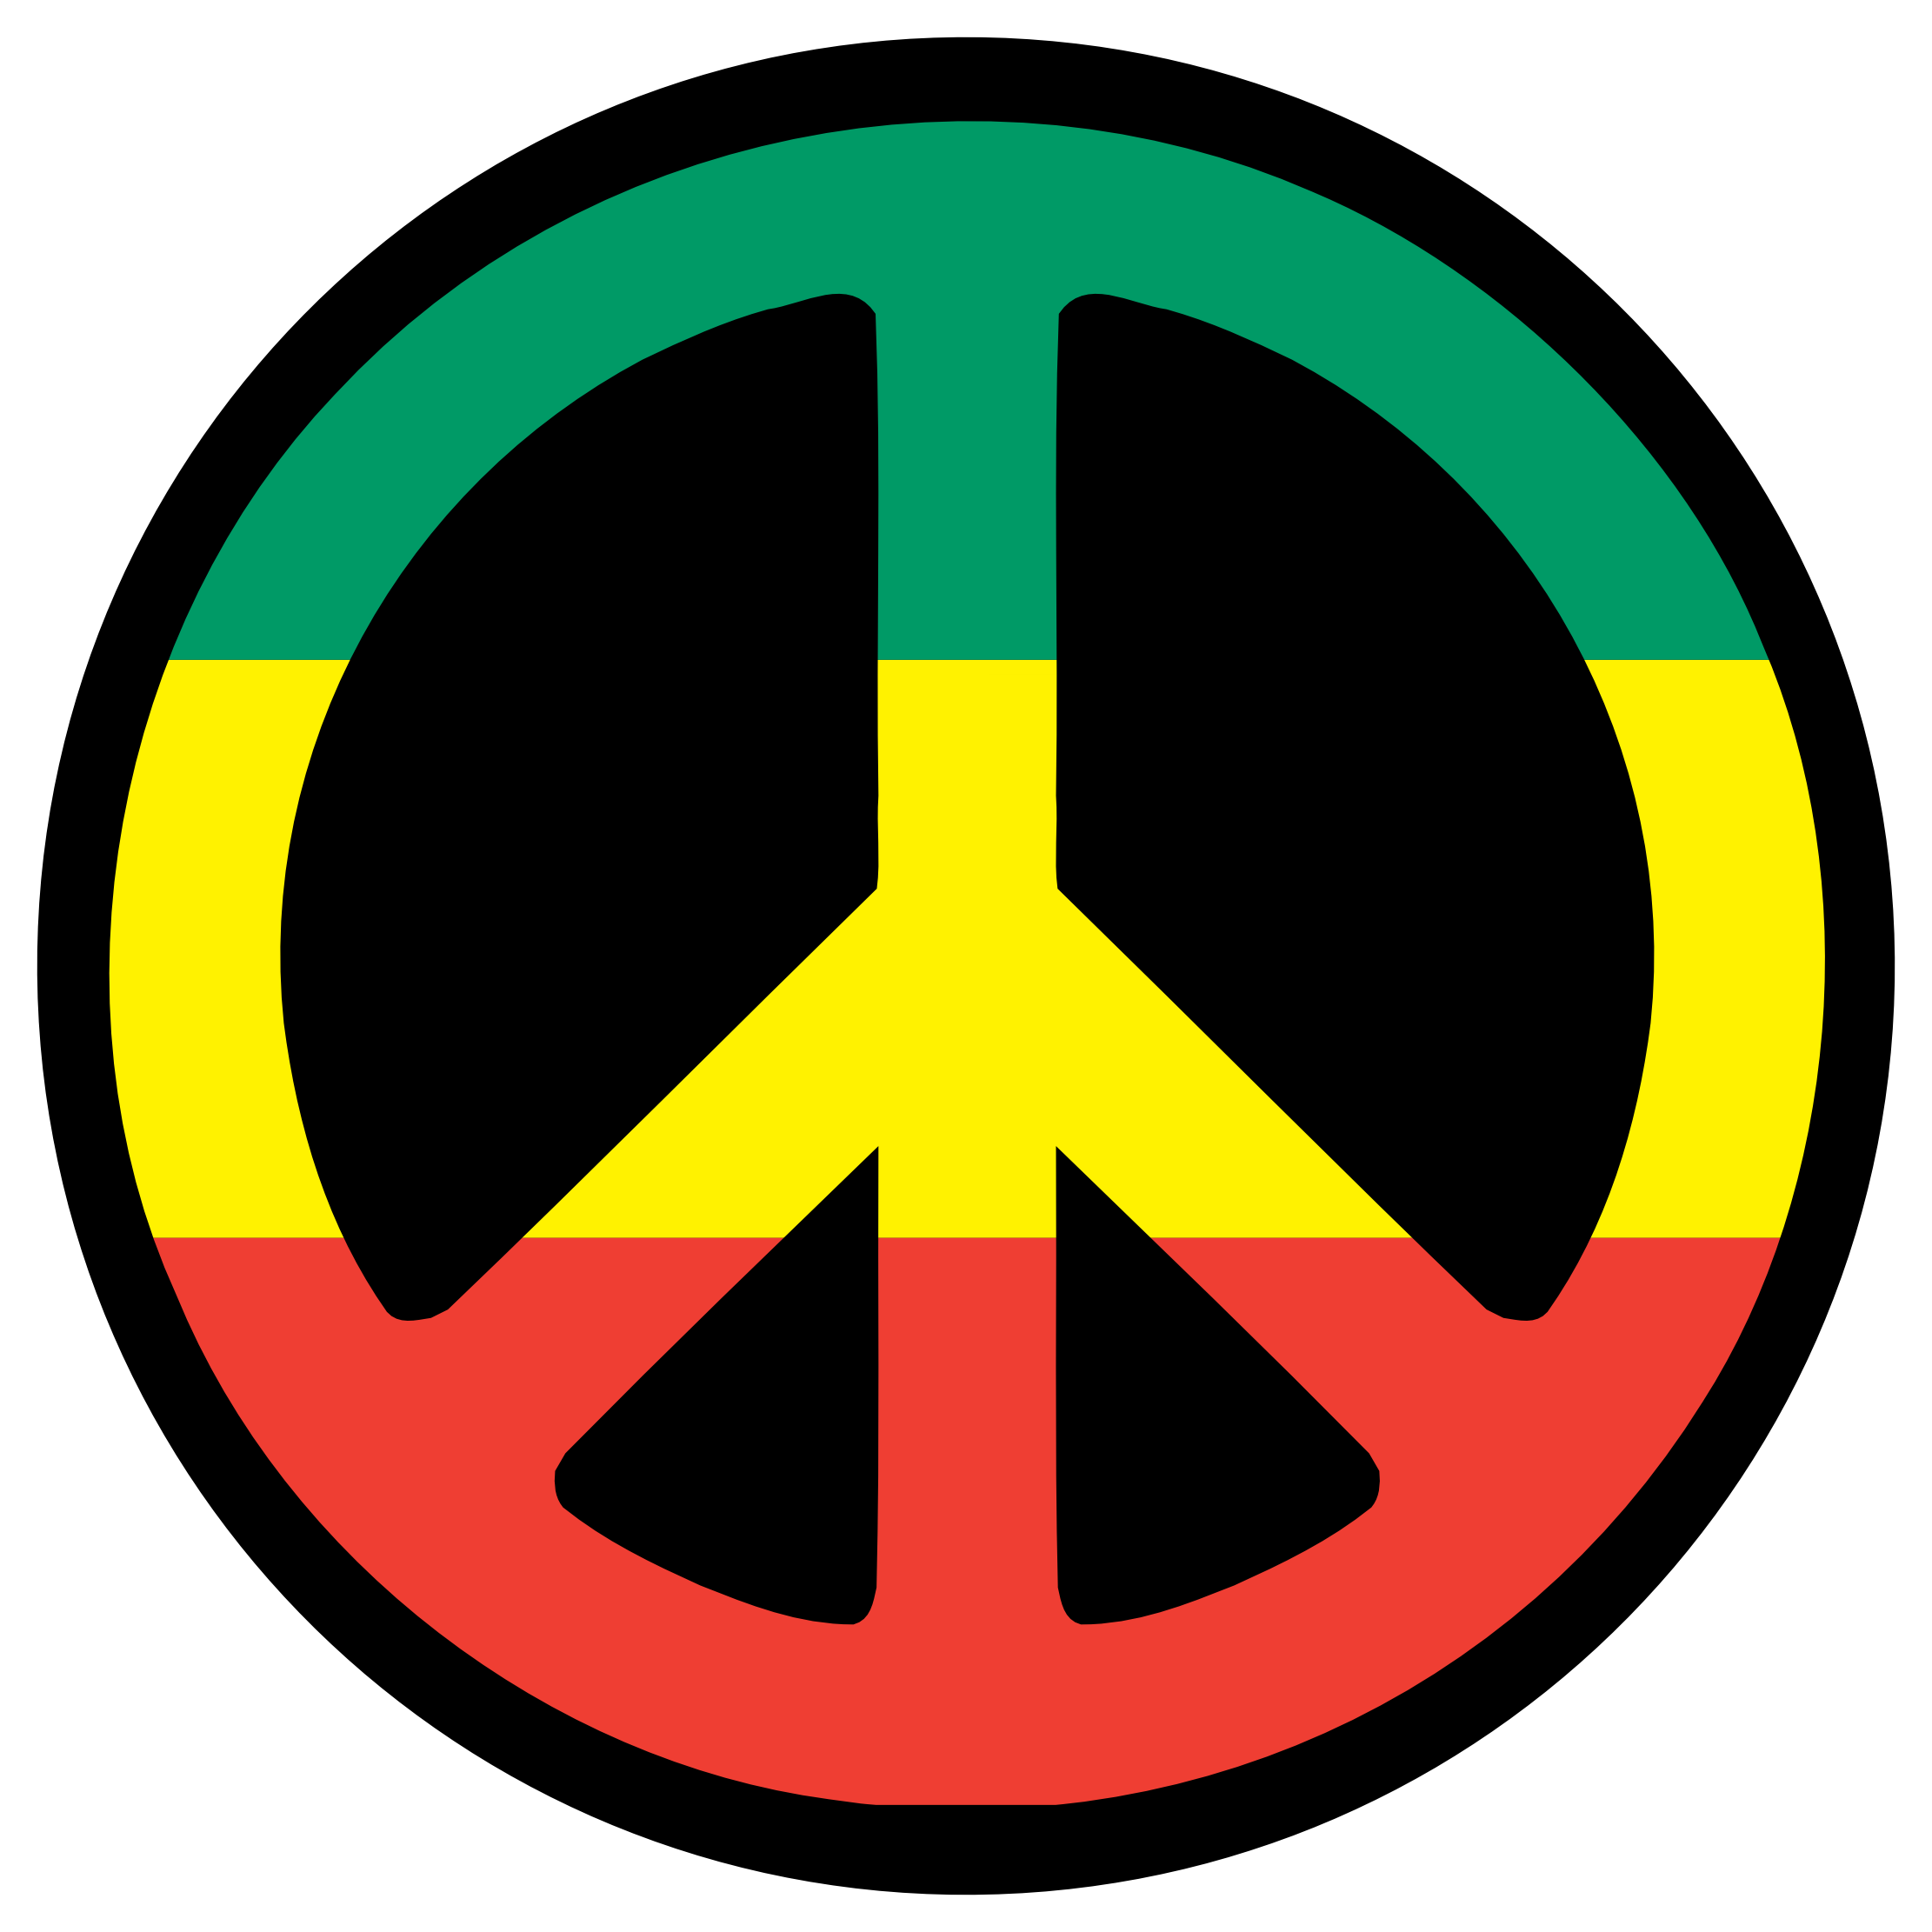 Ras Peace Sign Supercalifragilisticexpialidocious SVG peacesymbol.